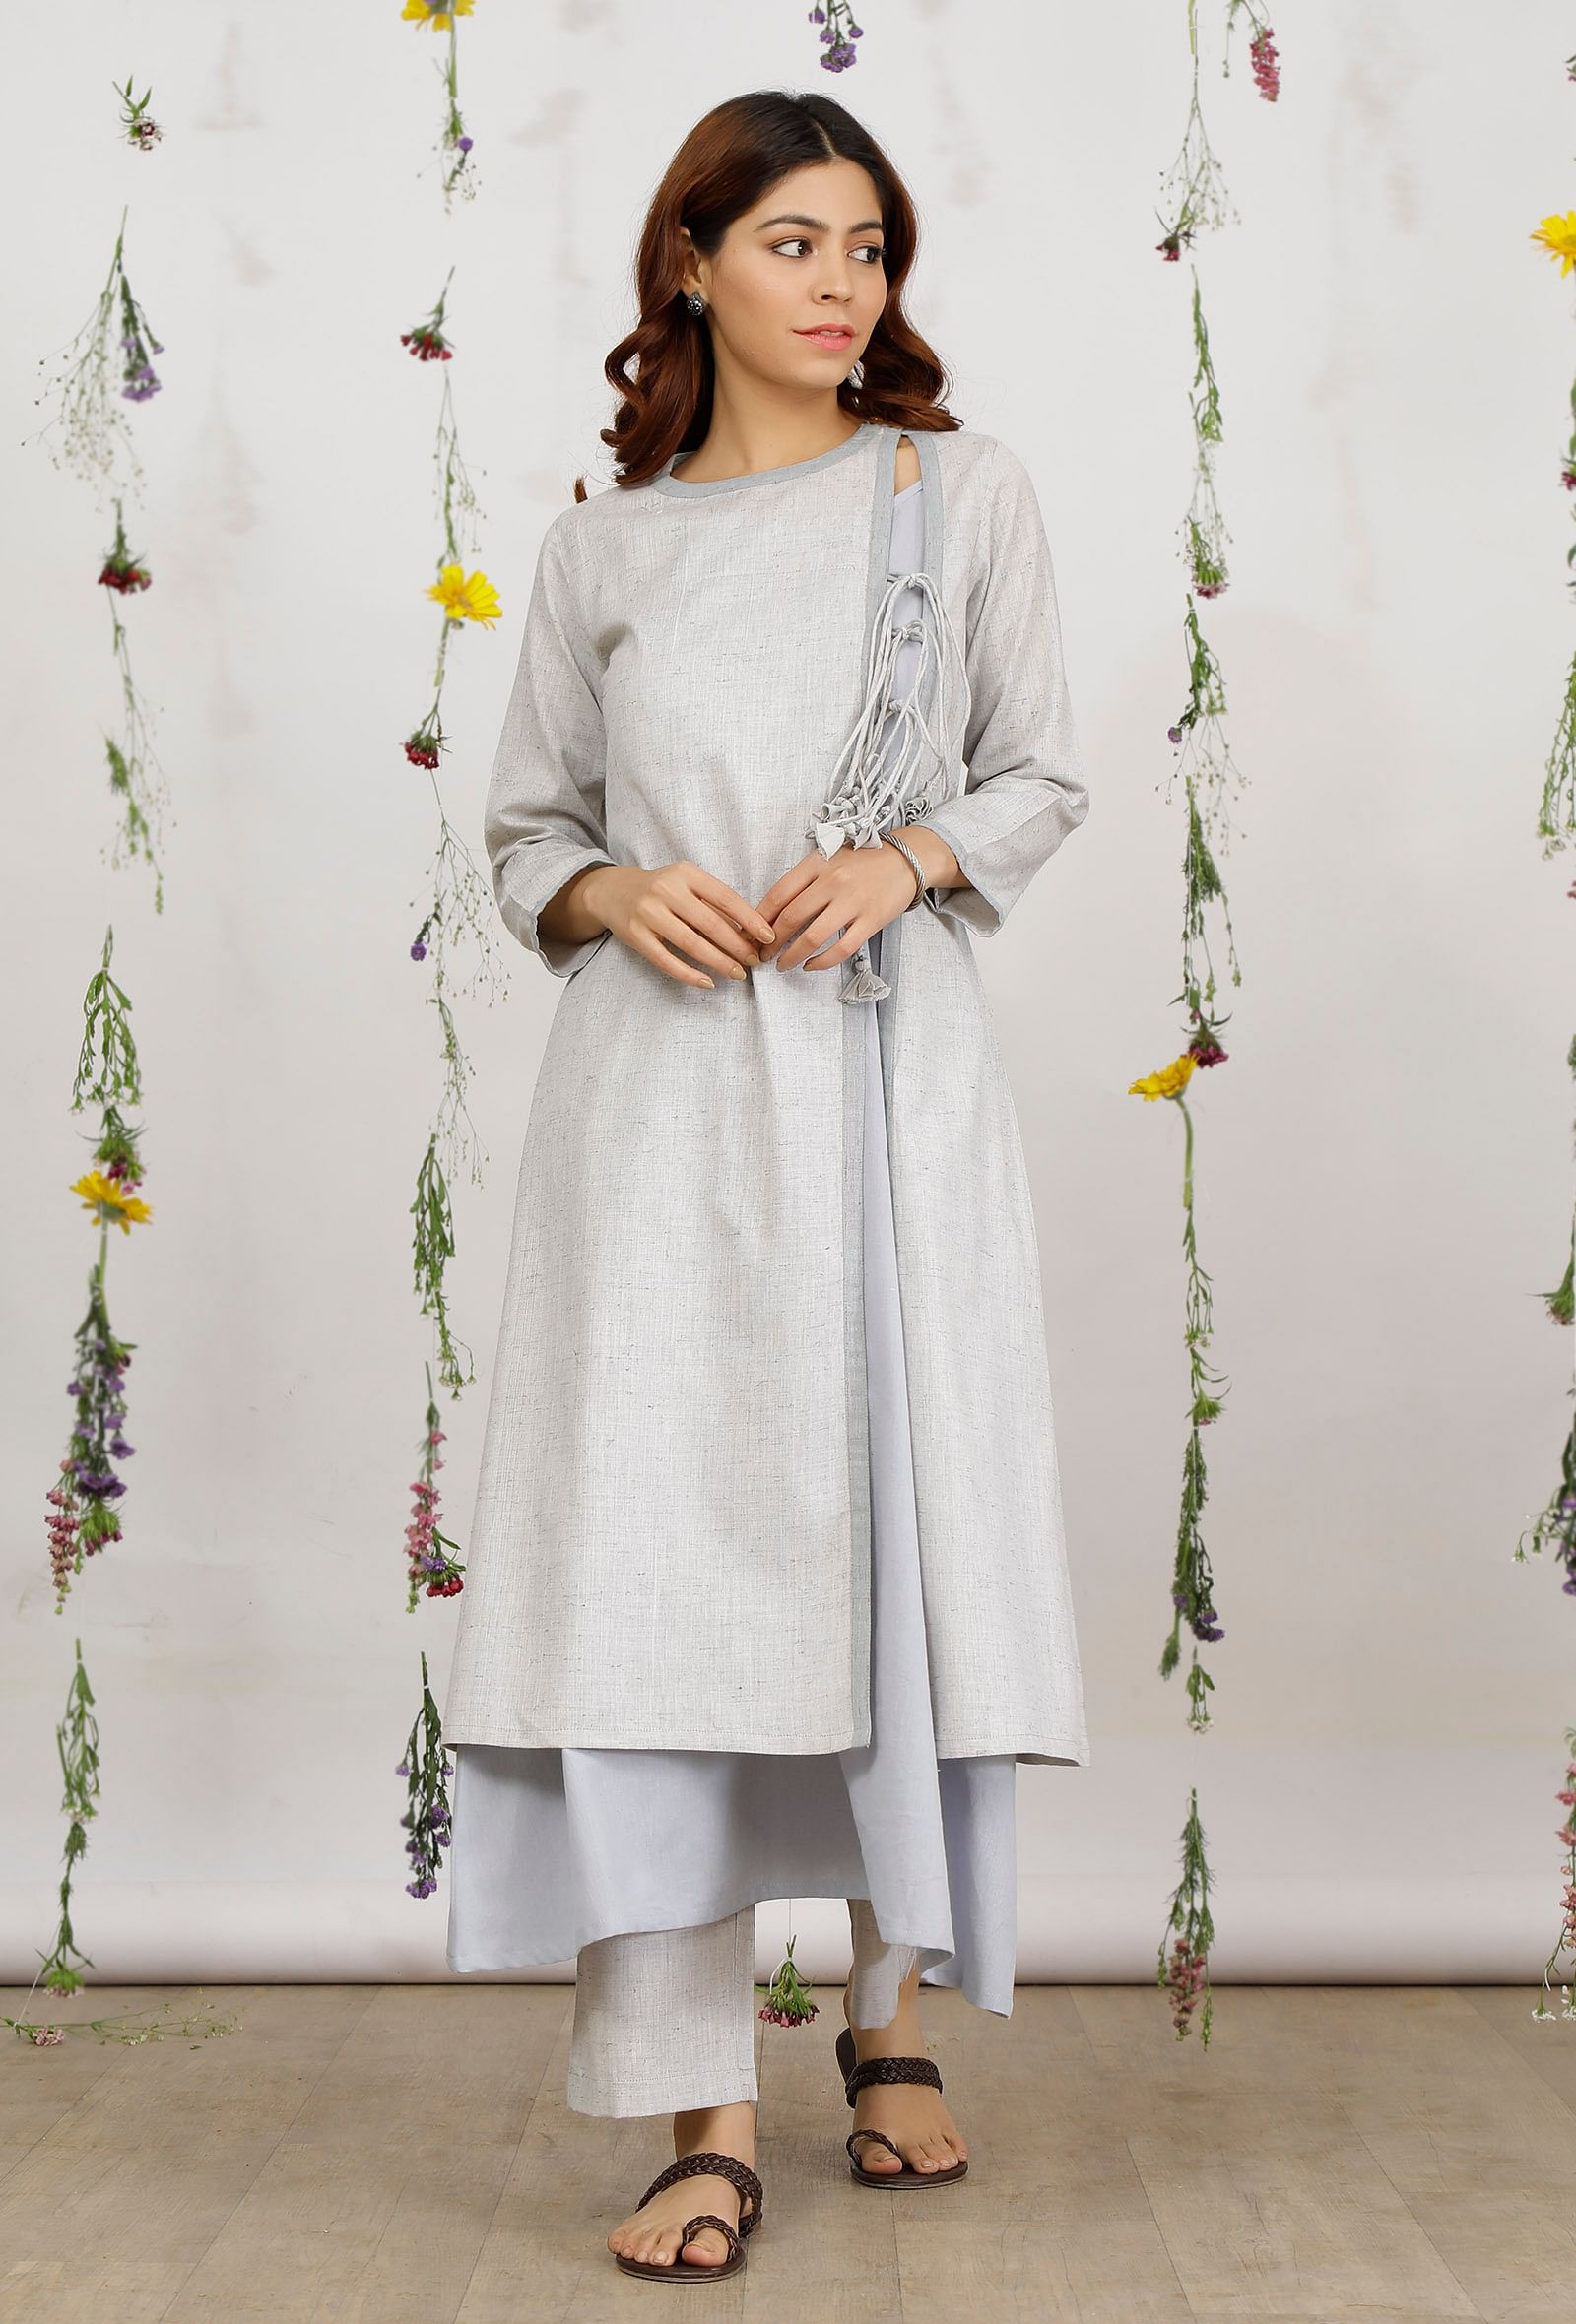 KSUT Kurtis Kurtas and Tunics  Buy KSUT Women Off White Floral Printed  Kurta Dress with Side Tie Up Online  Nykaa Fashion